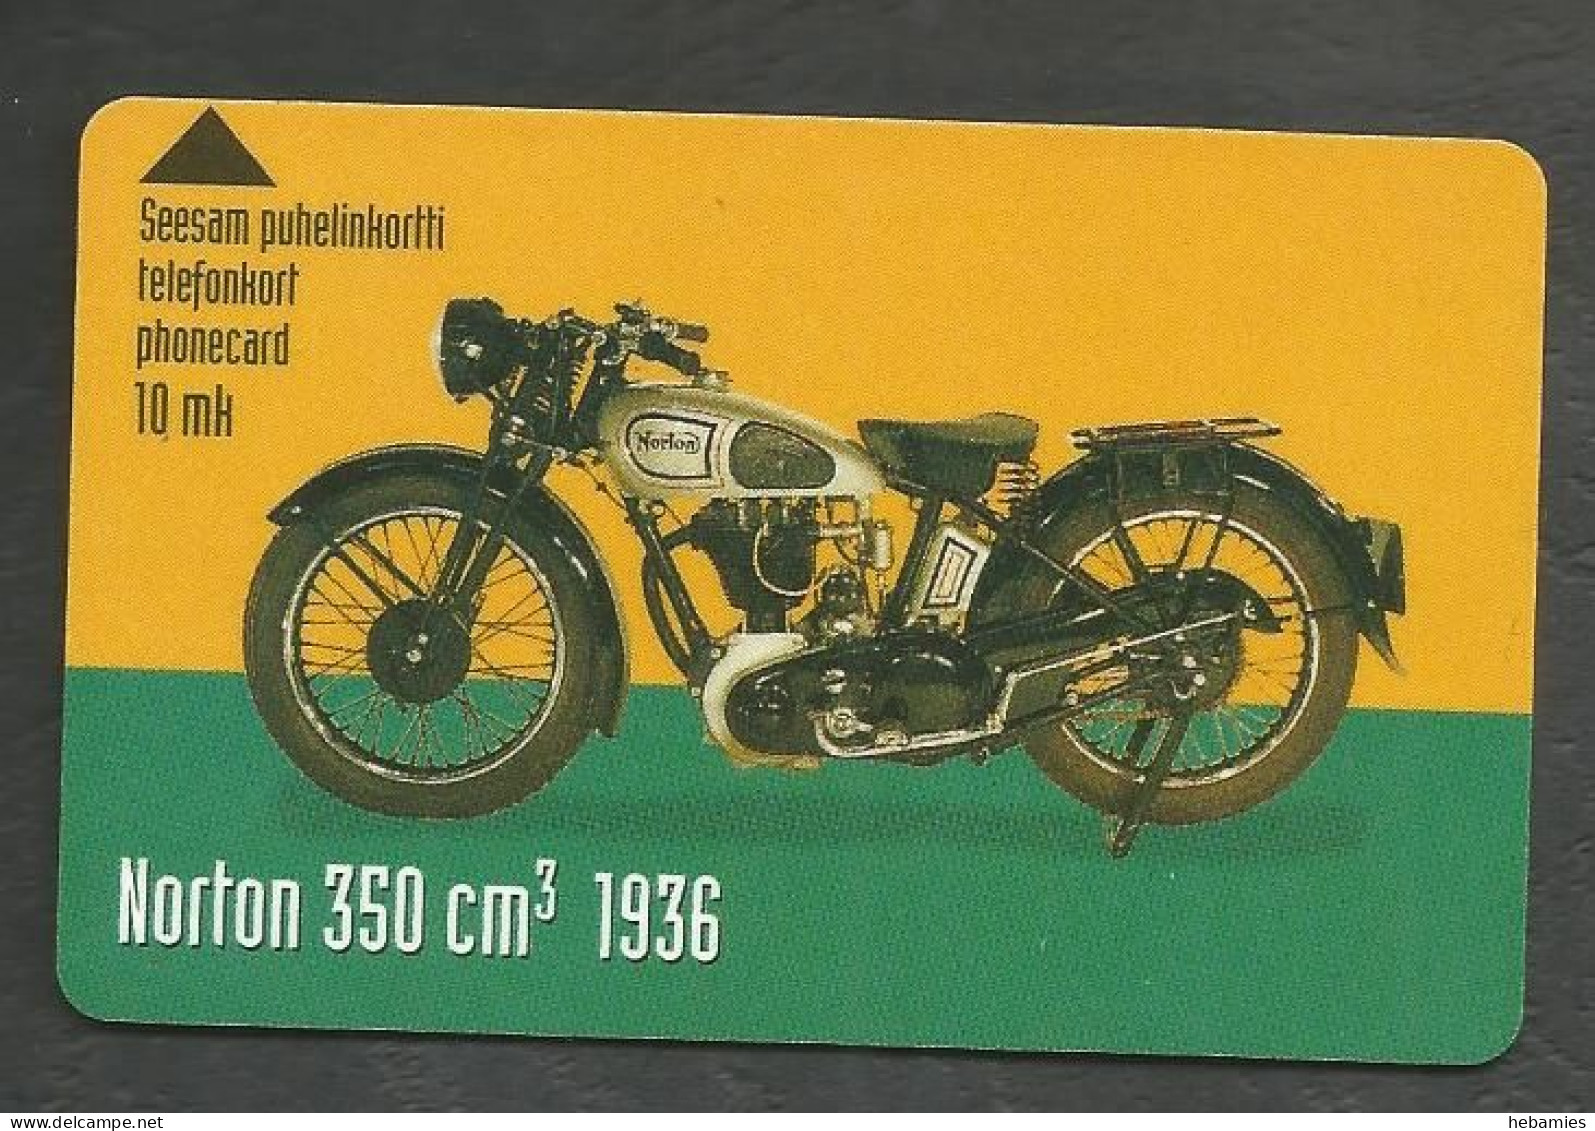 NORTON 350 Cm3 1936 - Magnetic Card -  10 FIM  FINNET - FINLAND - - Motos